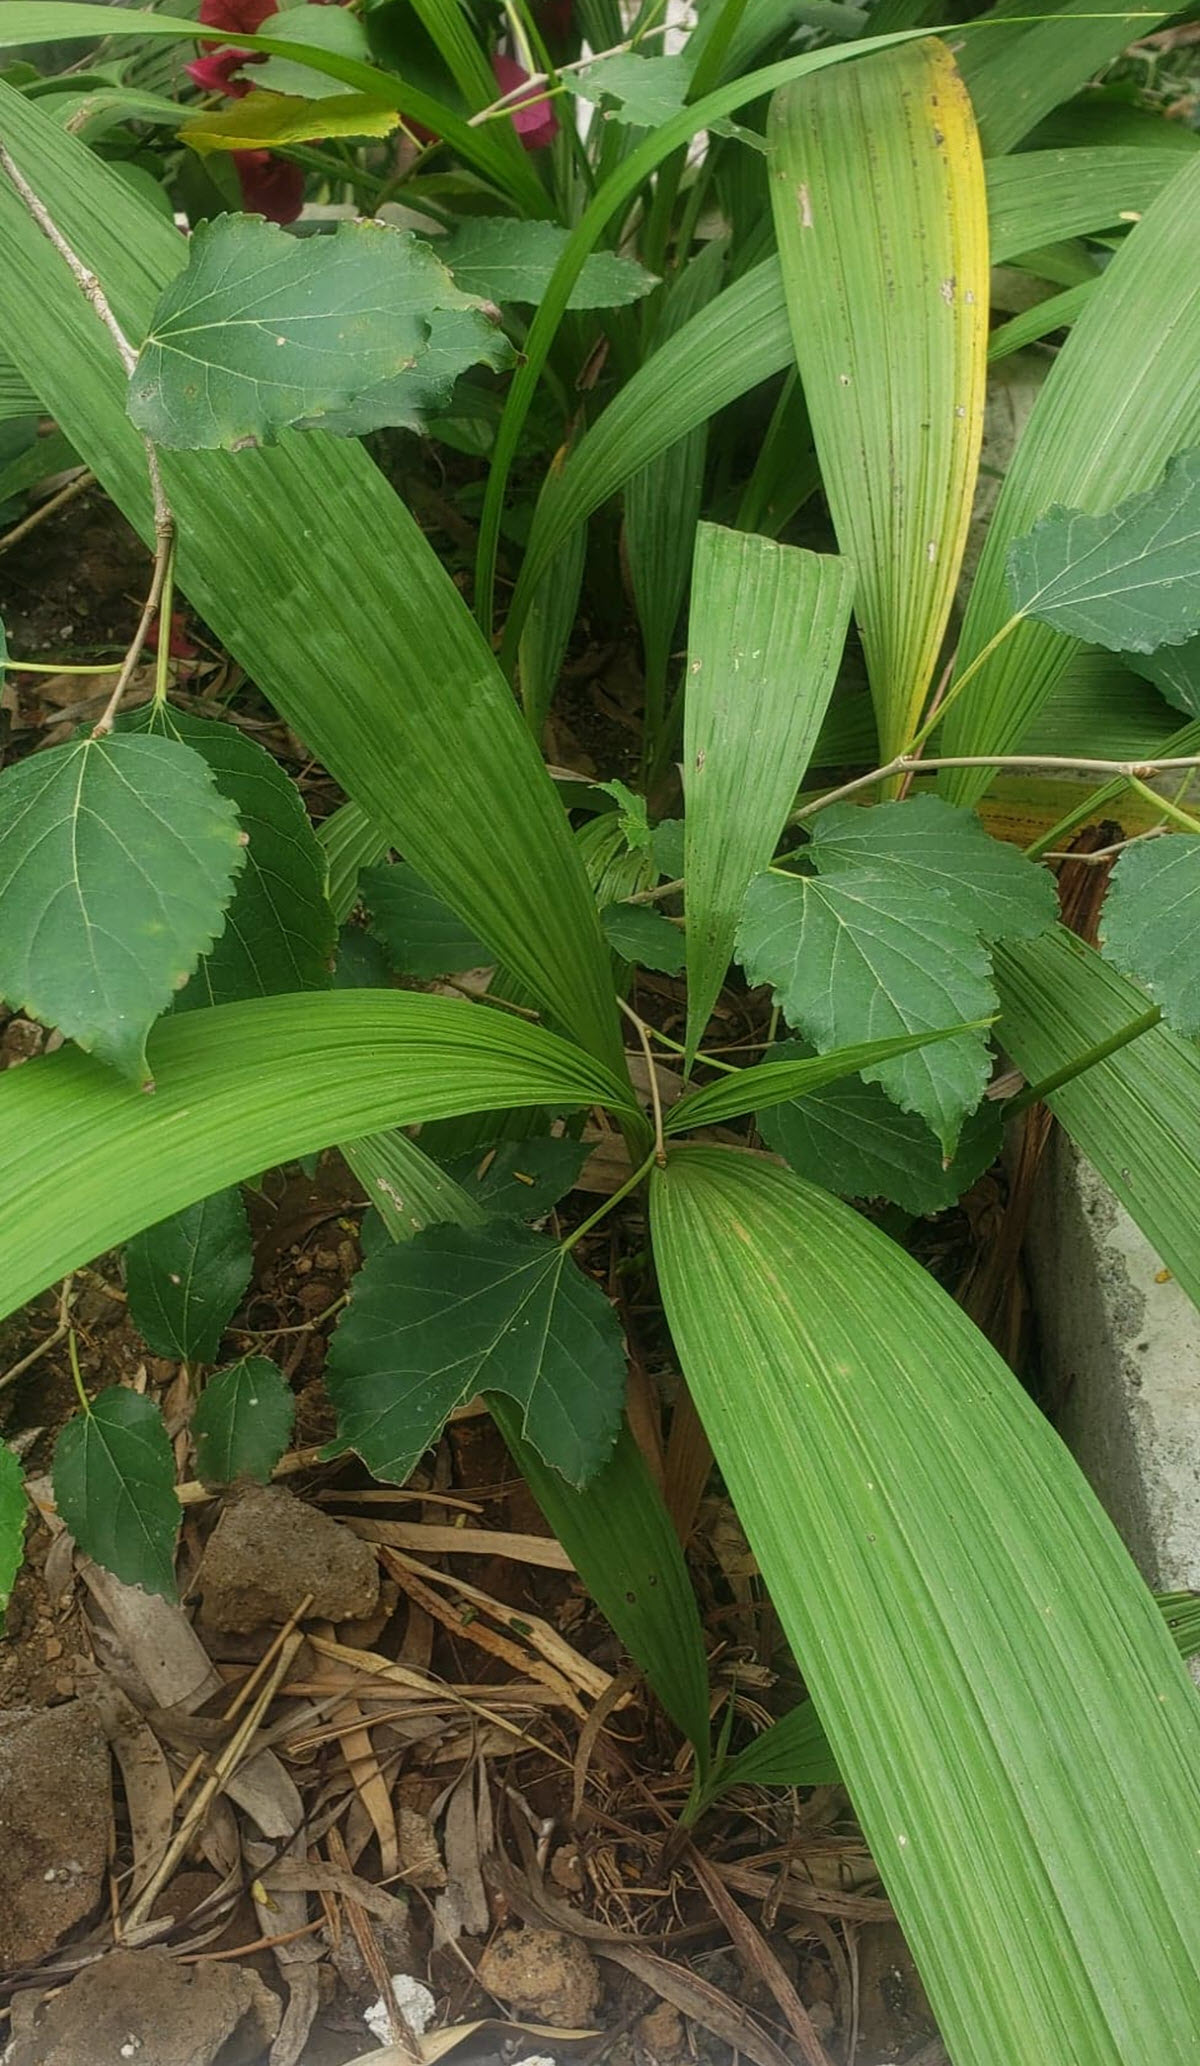 Spathoglottis leaves, terrestrial orchid